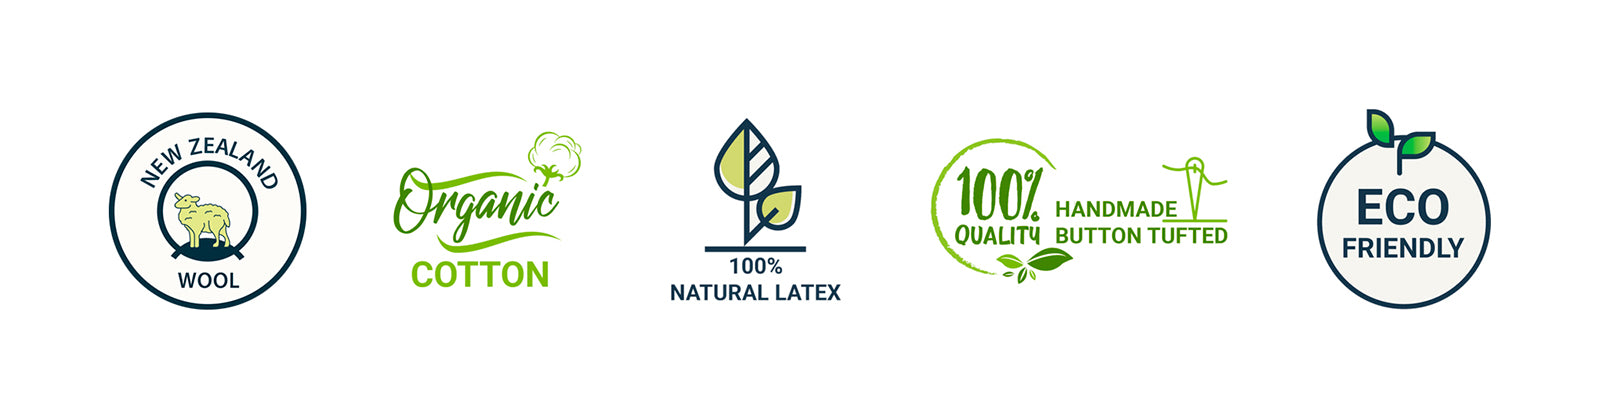 Row of logos image.  New Zealand Wool logo, Organic Cotton Logo, Natural Organic Latex Logo, 100% Hand Made Logo, Eco Friendly Logo